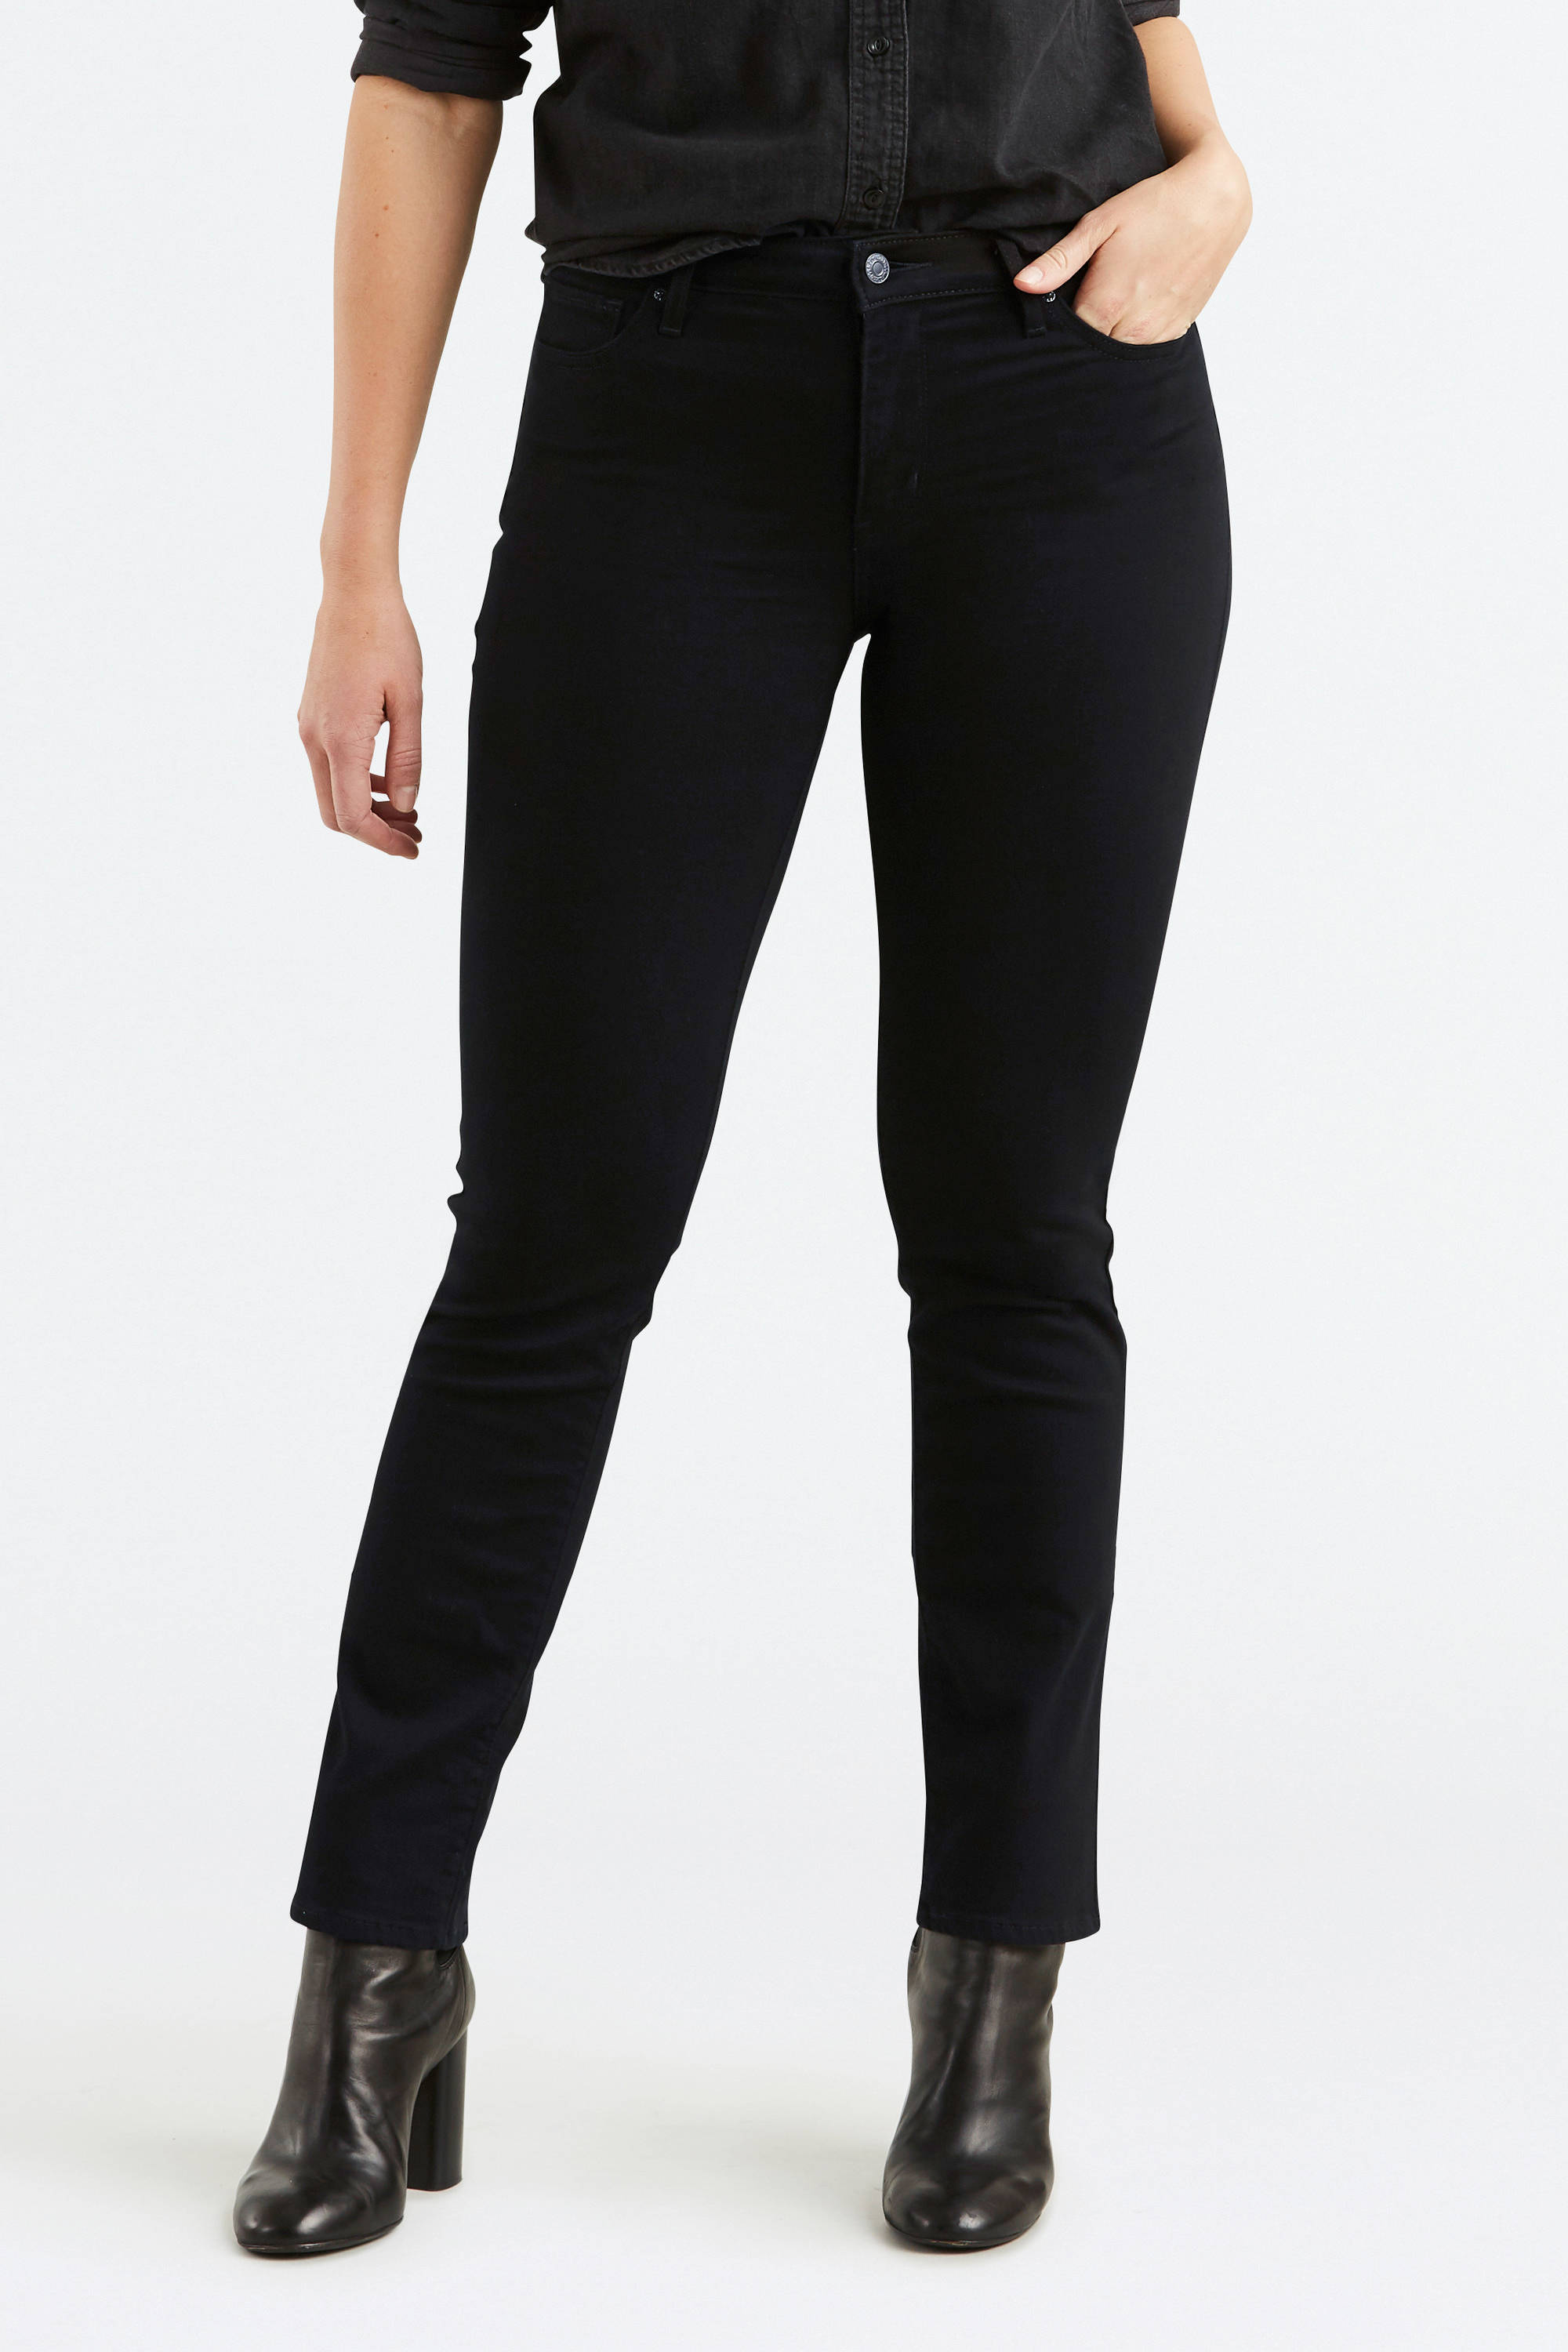 levi's slim fit jeans for ladies